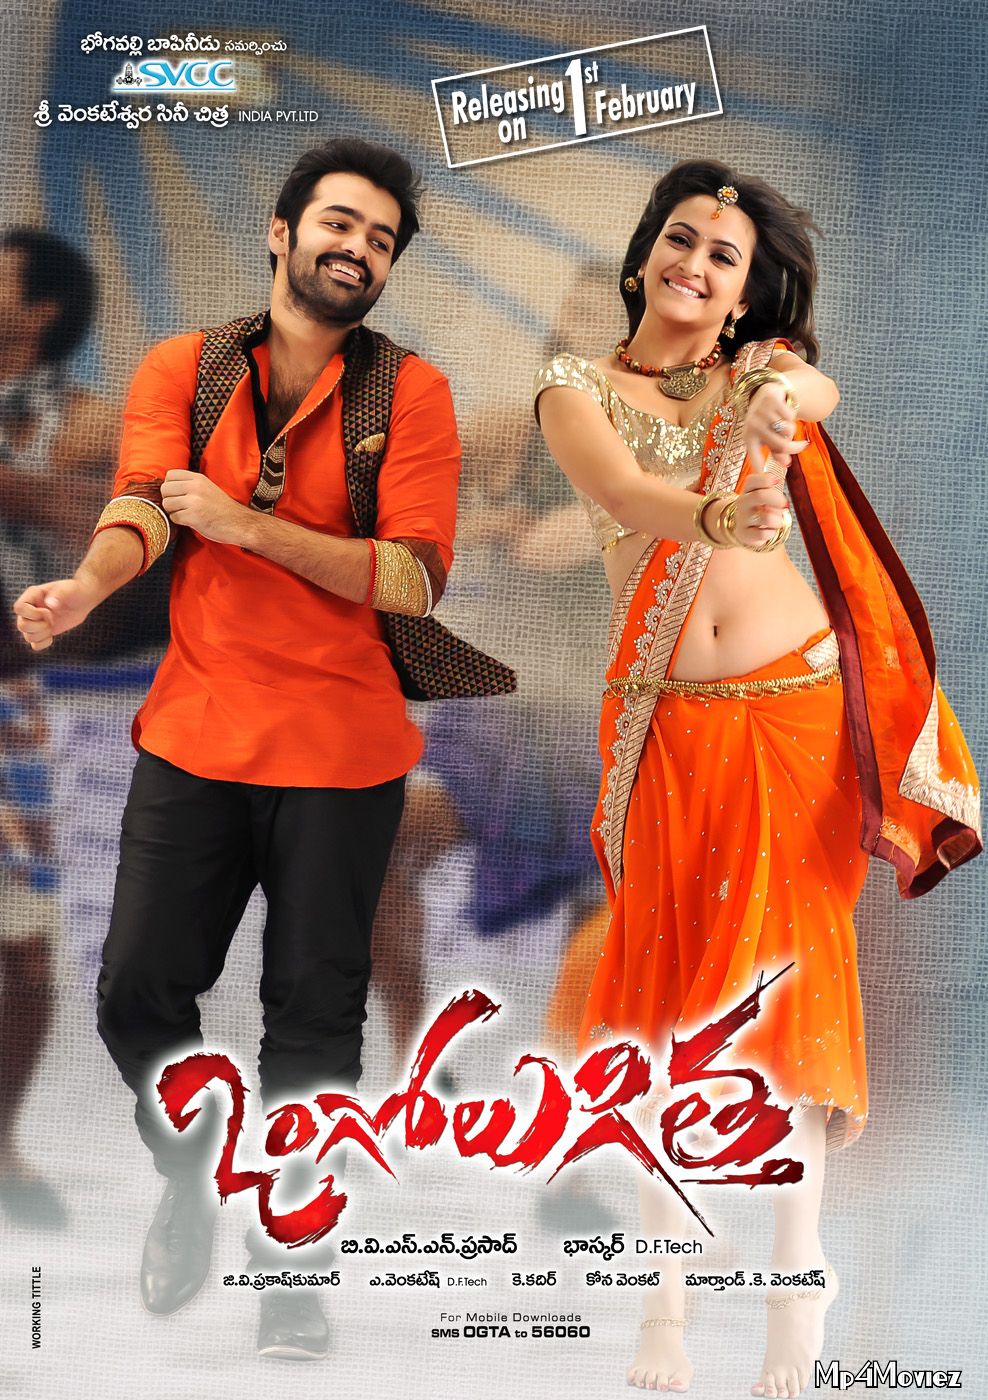 Kaariyavathi (Ongole Gittha) 2013 Hindi Dubbed Full Movie download full movie